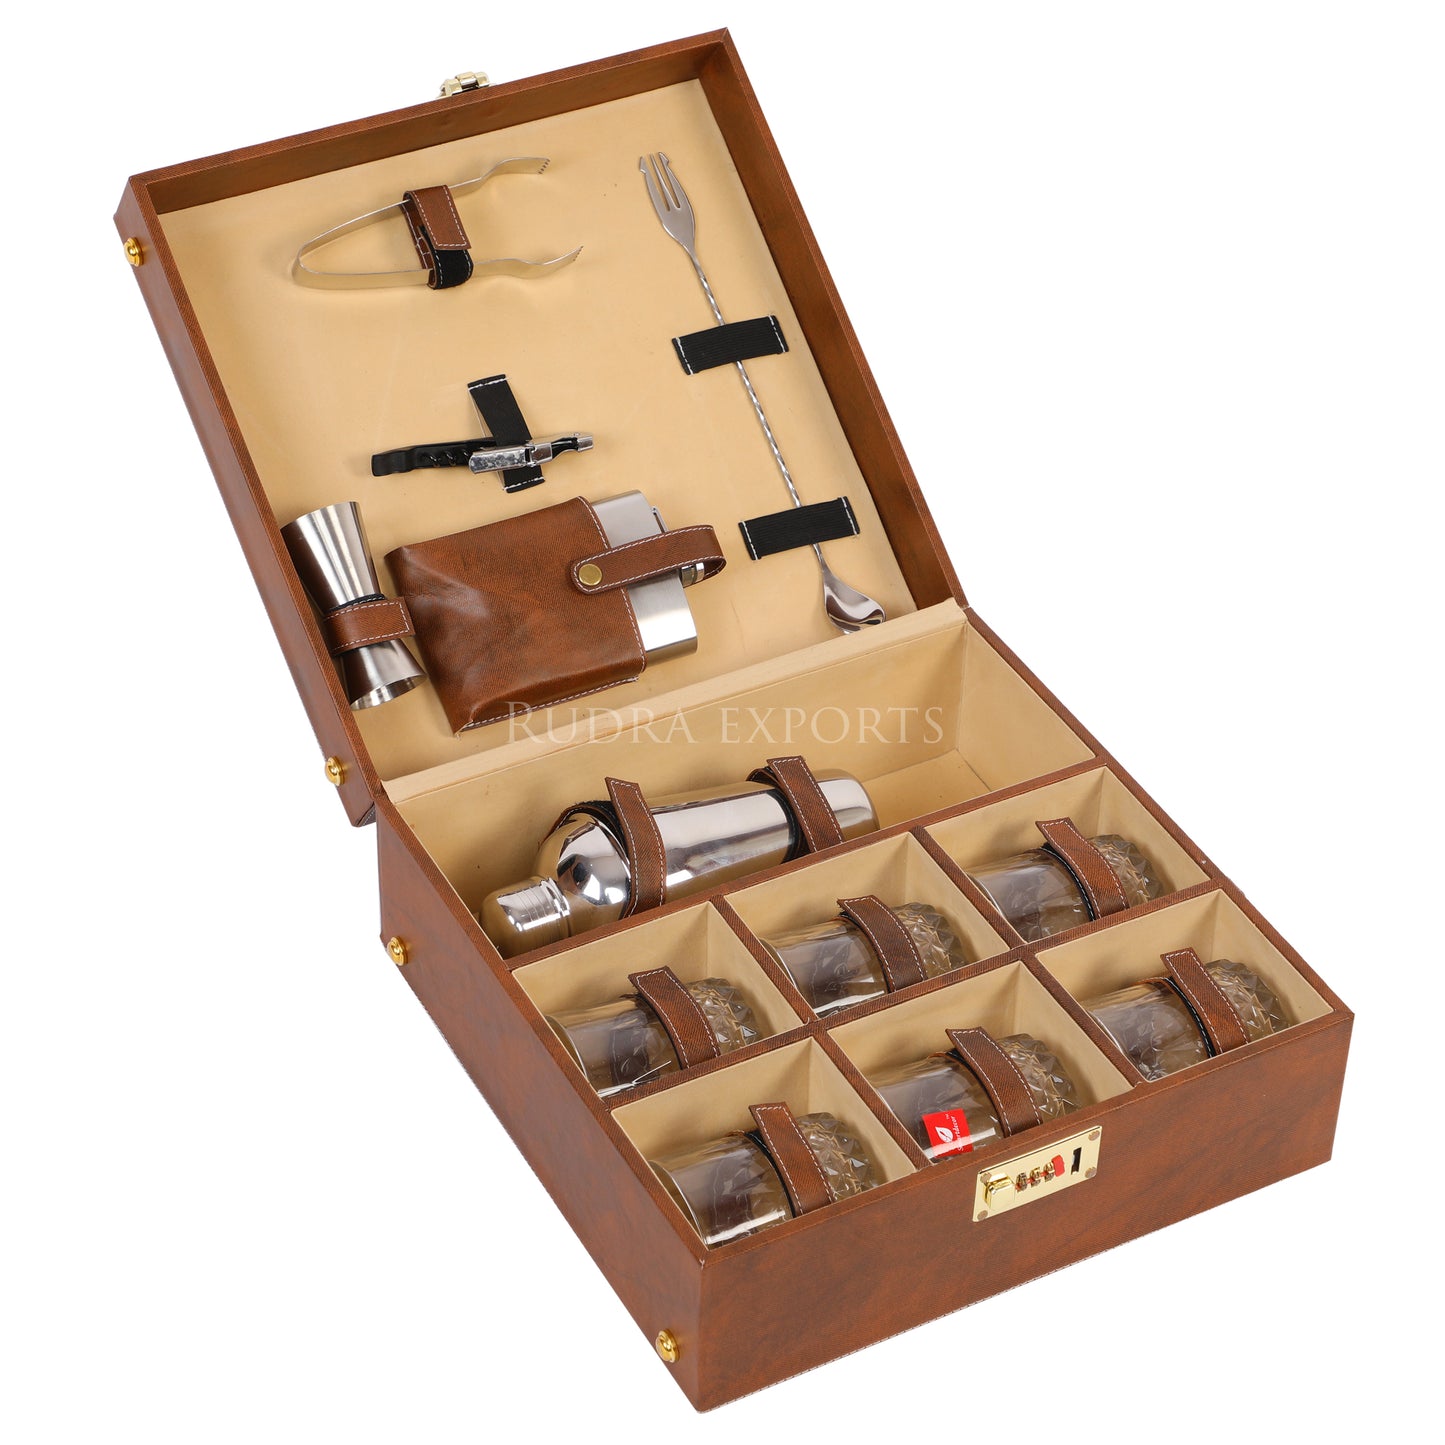 Rudra Exports Premium Bar Set with Bottle Handy Portable Leatherette Bar Set, Travel Bar Set for car | 6 Whiskey Glasses (Brown)